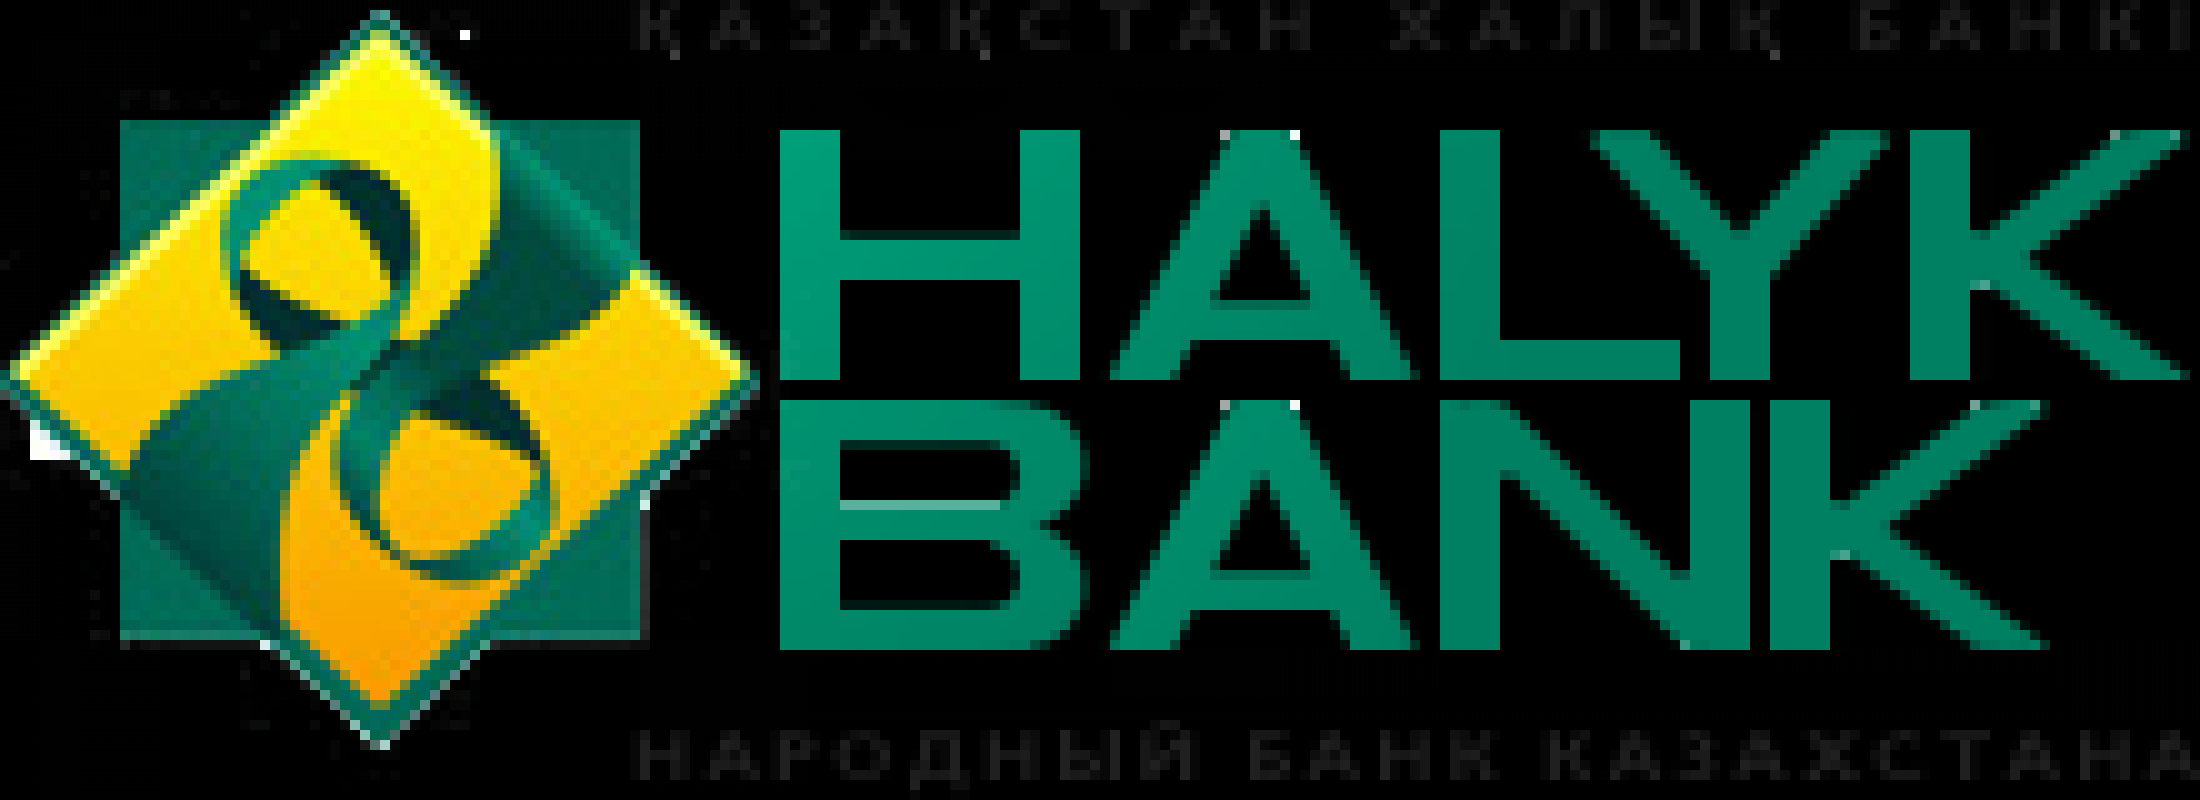 Фото Народный банк Казахстана - Алматы